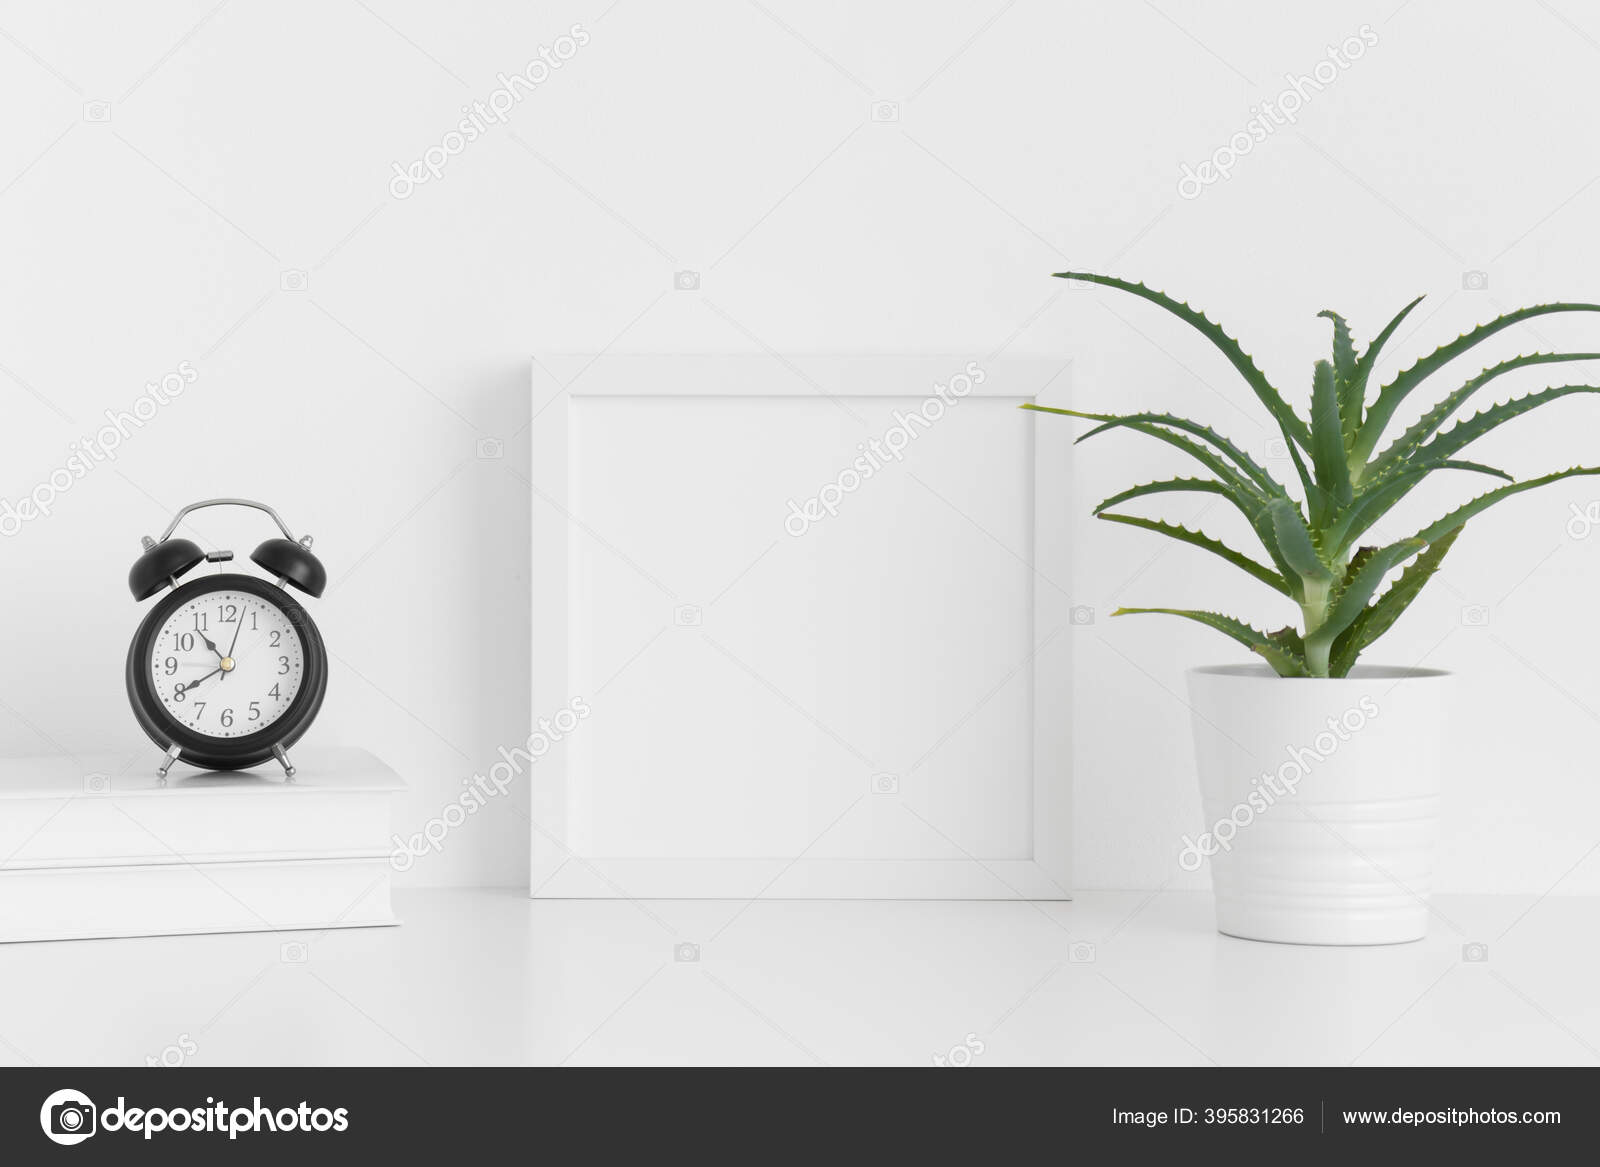 Download Putih Persegi Mockup Dengan Buaya Aloe Dalam Pot Dan Aksesoris Stok Foto C Snoflinga 395831266 PSD Mockup Templates